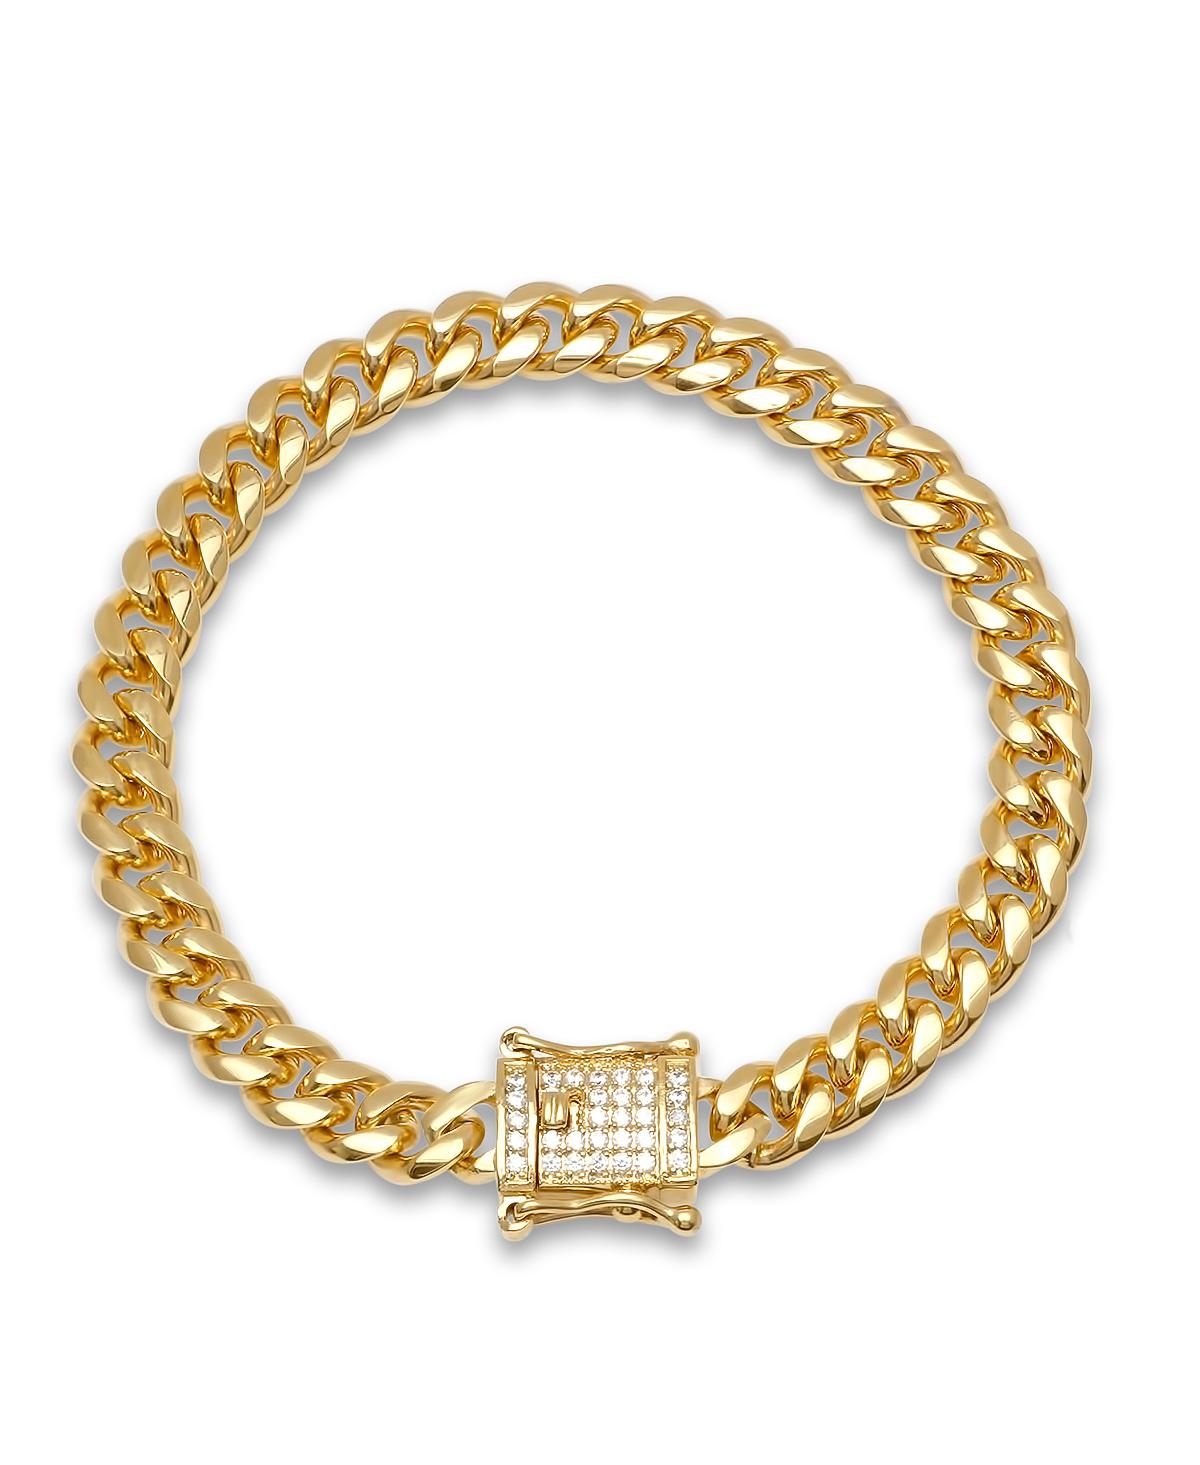 Miami Cuban Chain with Simulated Diamond Box Clasp Bracelet - Yellow